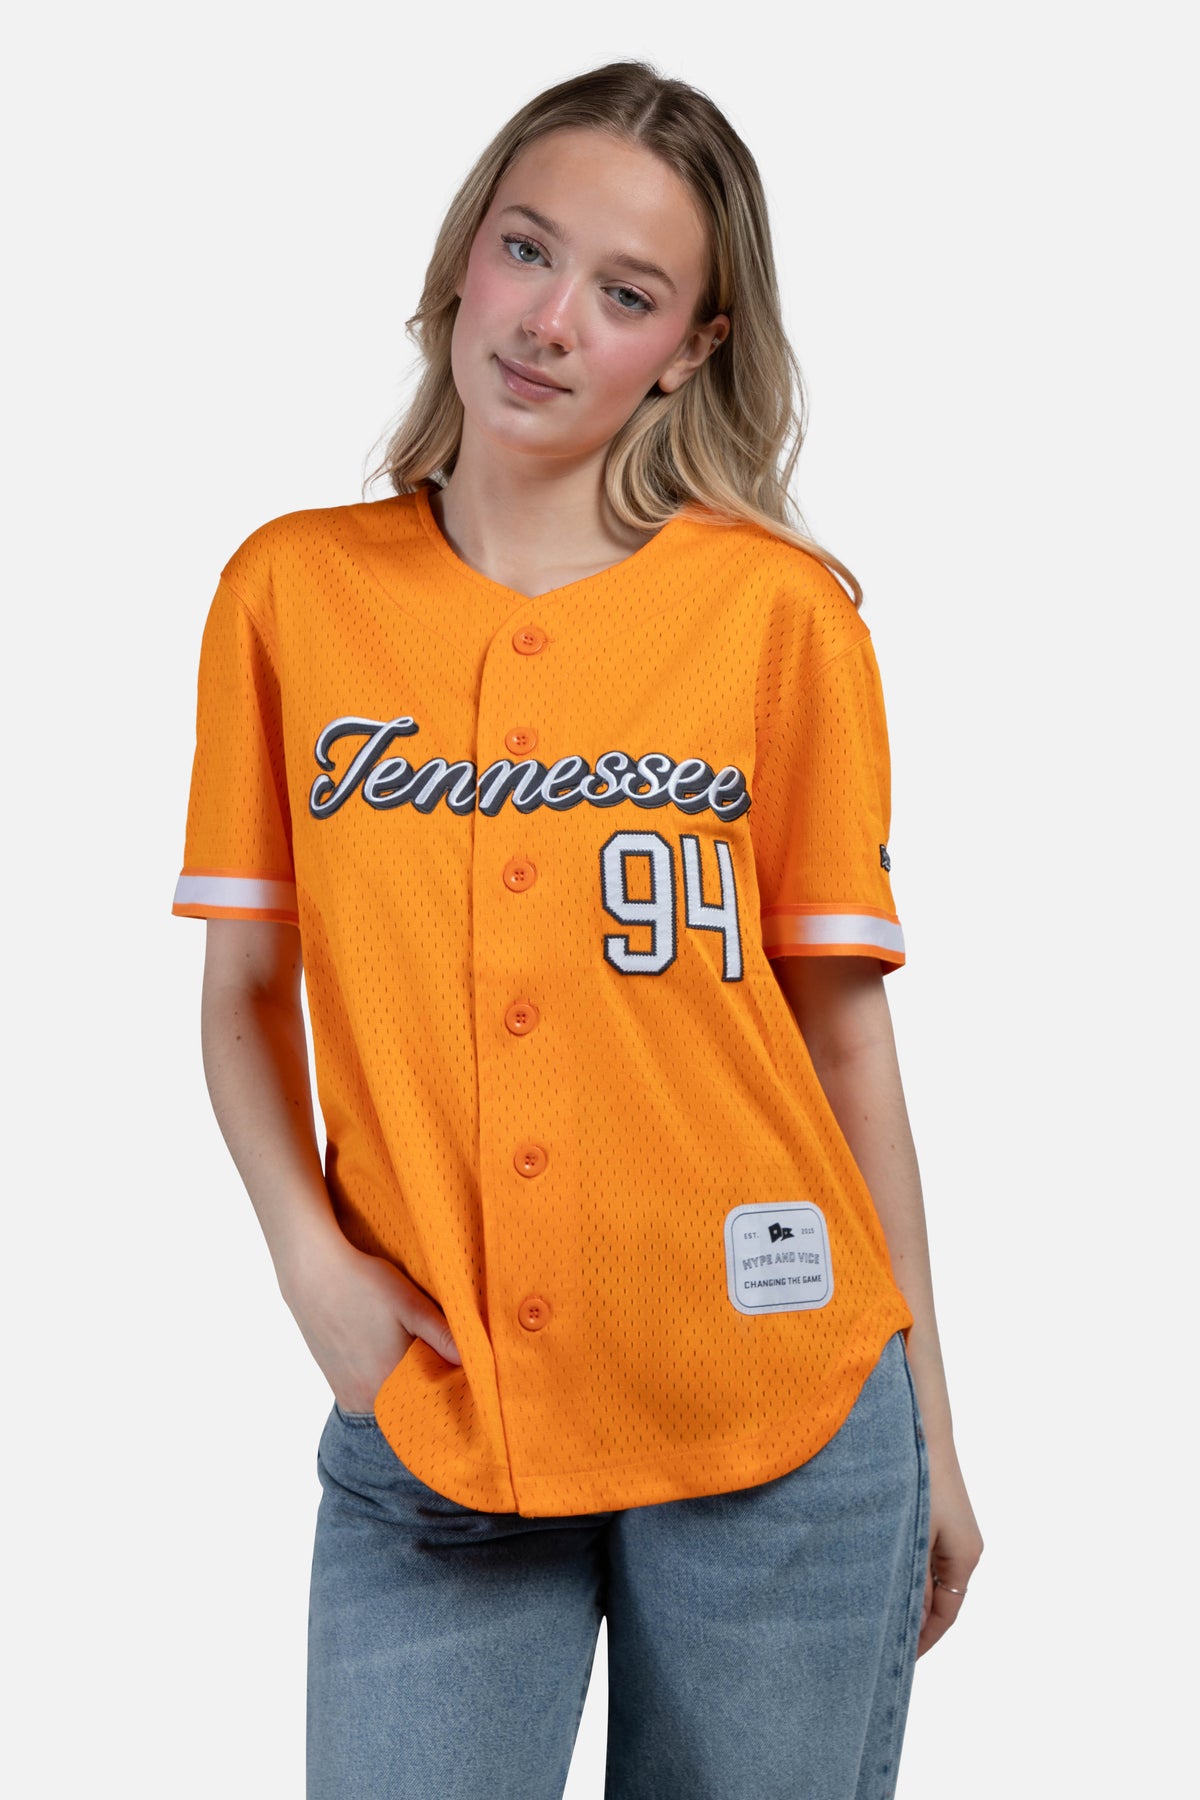 University of Tennessee Baseball Top